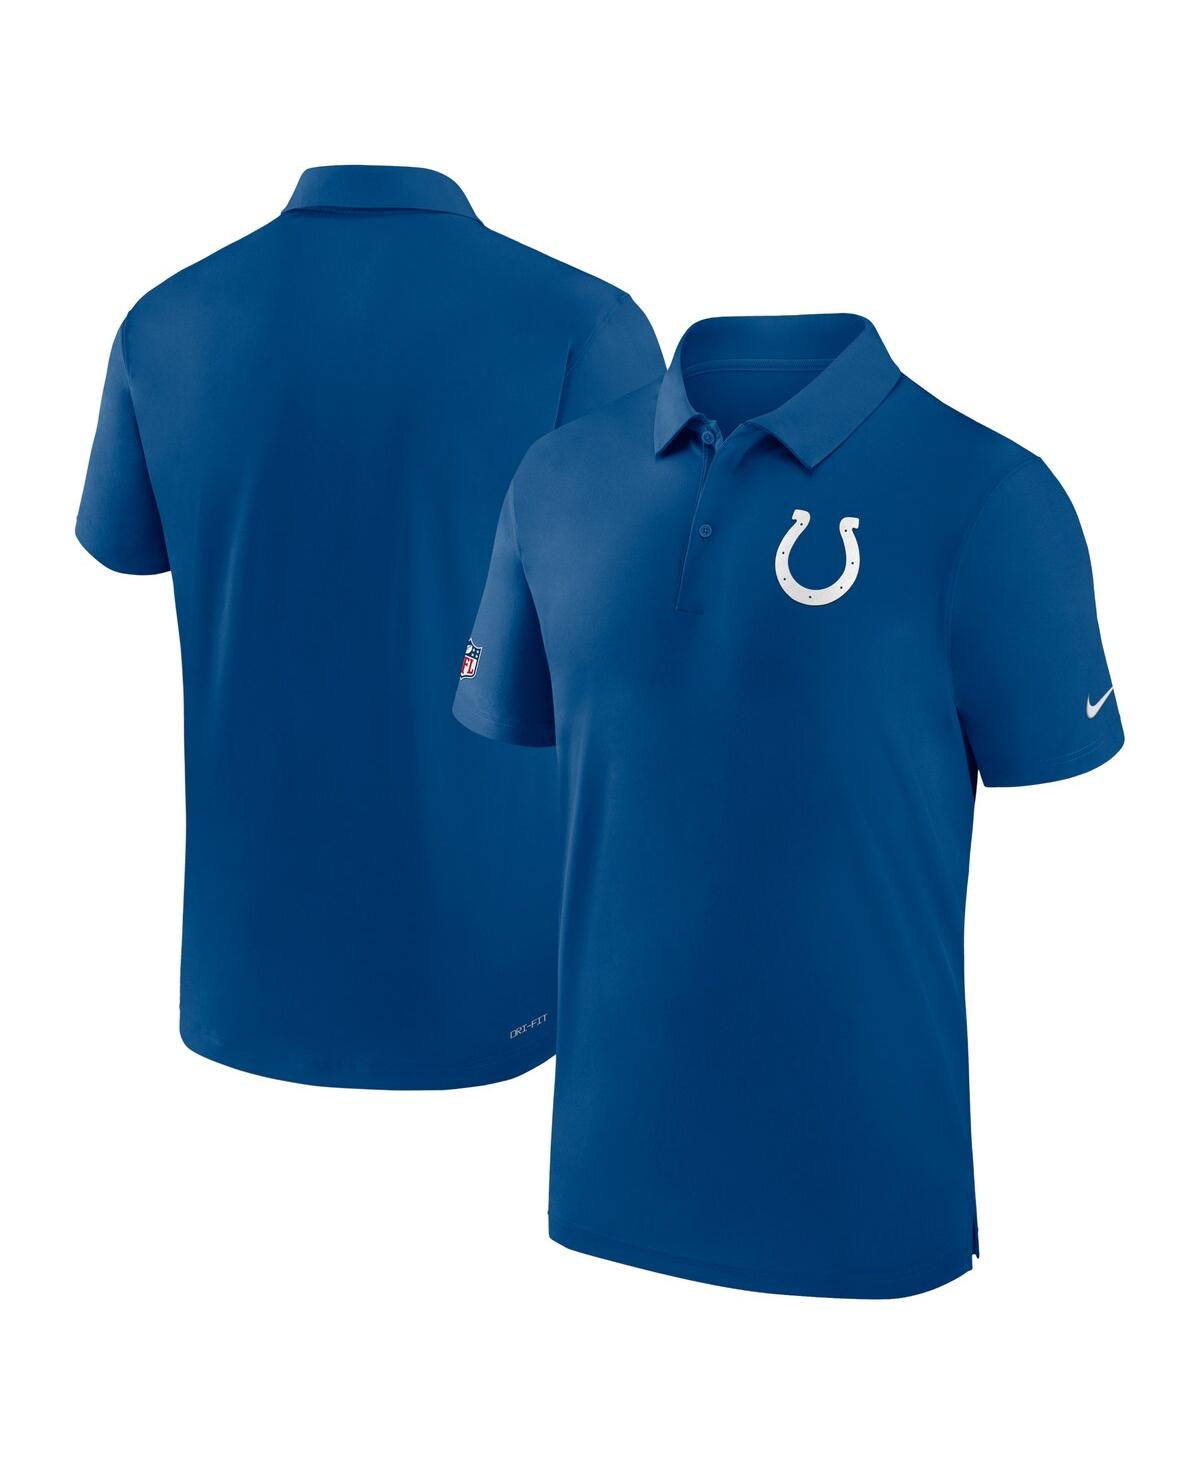 Shop Nike Men's  Royal Indianapolis Colts Sideline Coaches Performance Polo Shirt